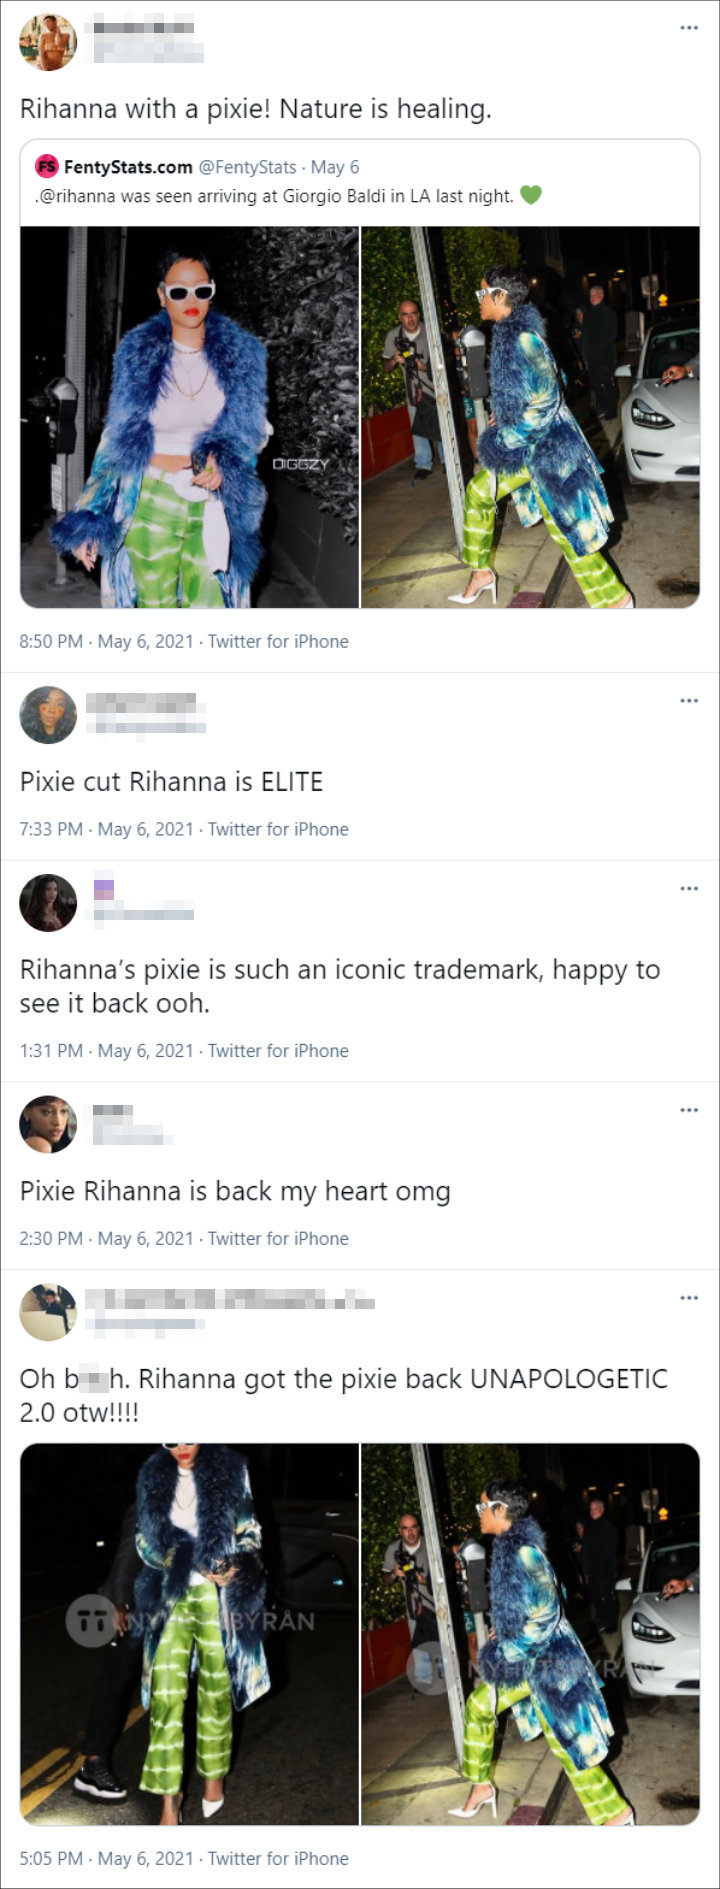 Tweets of Rihanna's fans